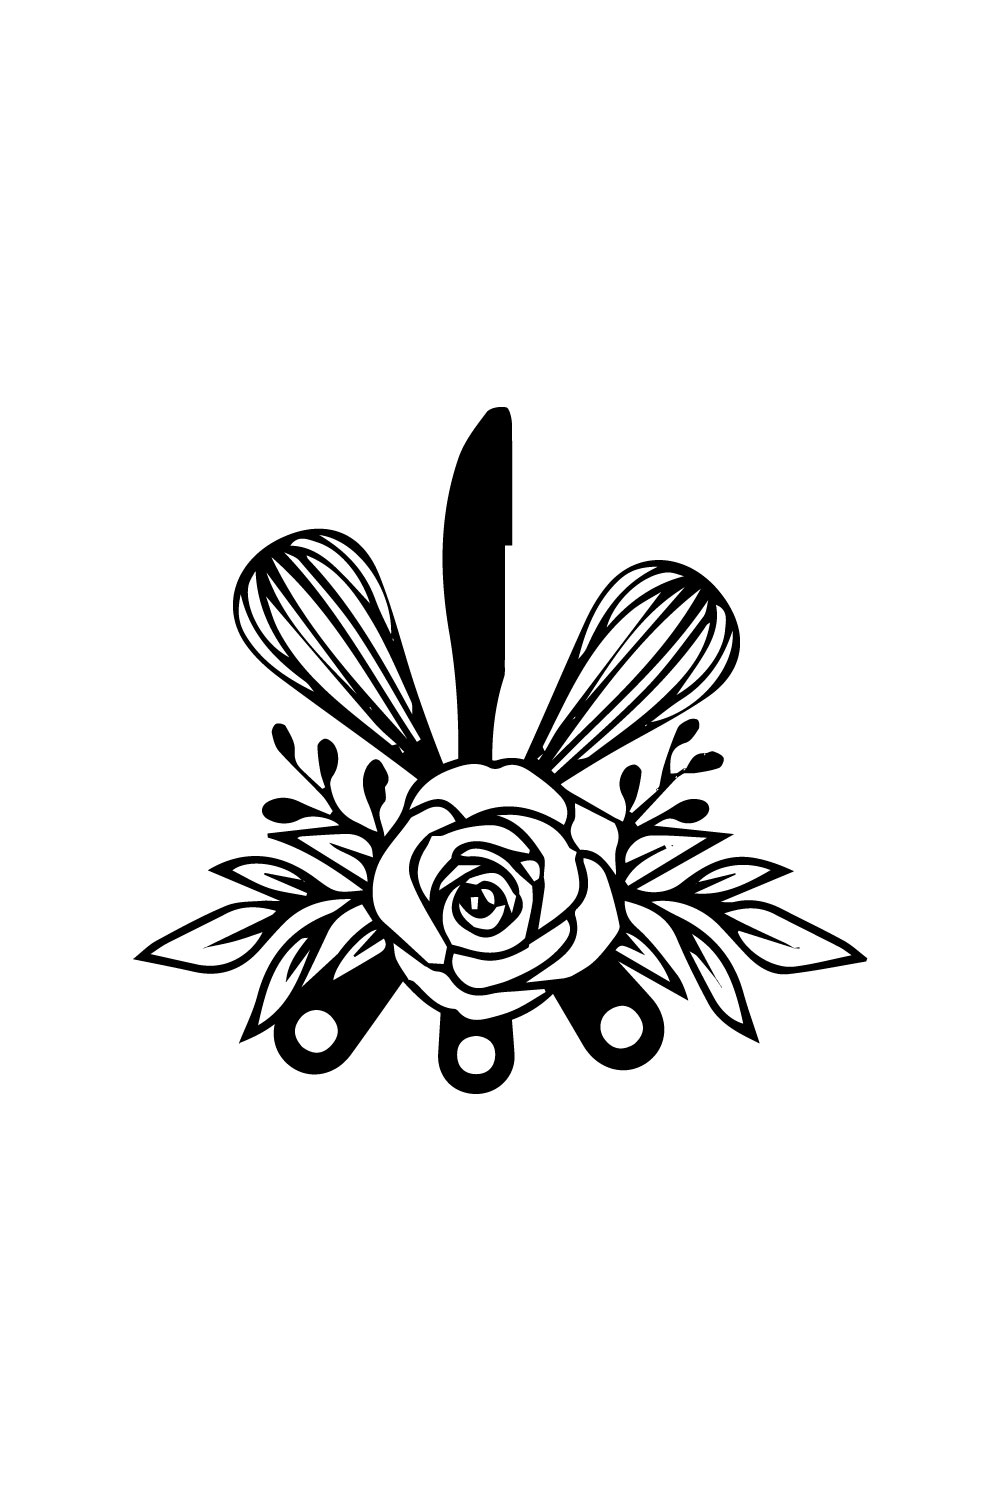 Free flower spoon logo pinterest preview image.